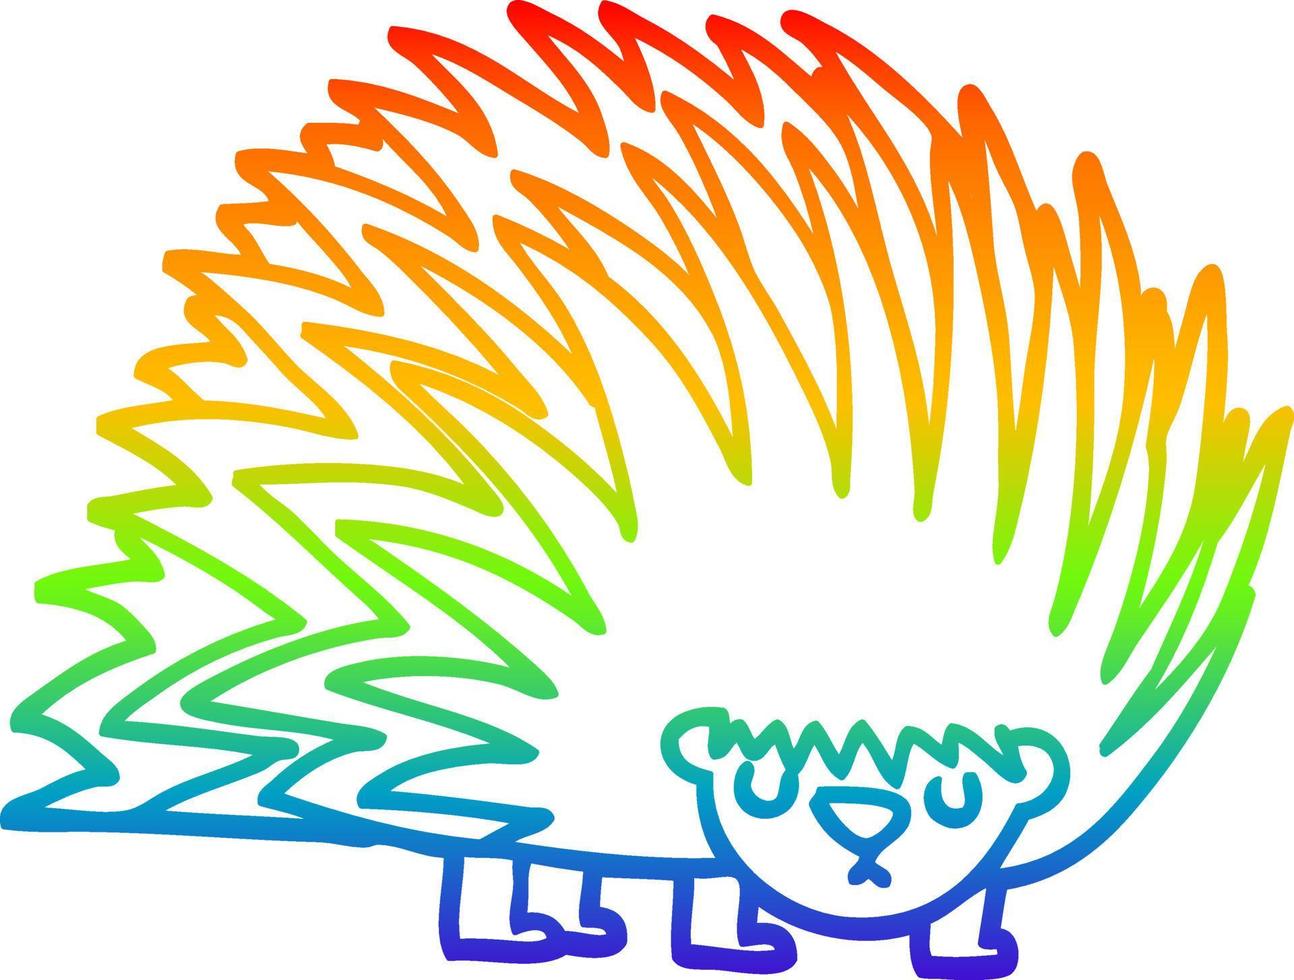 rainbow gradient line drawing cartoon spiky hedgehog vector